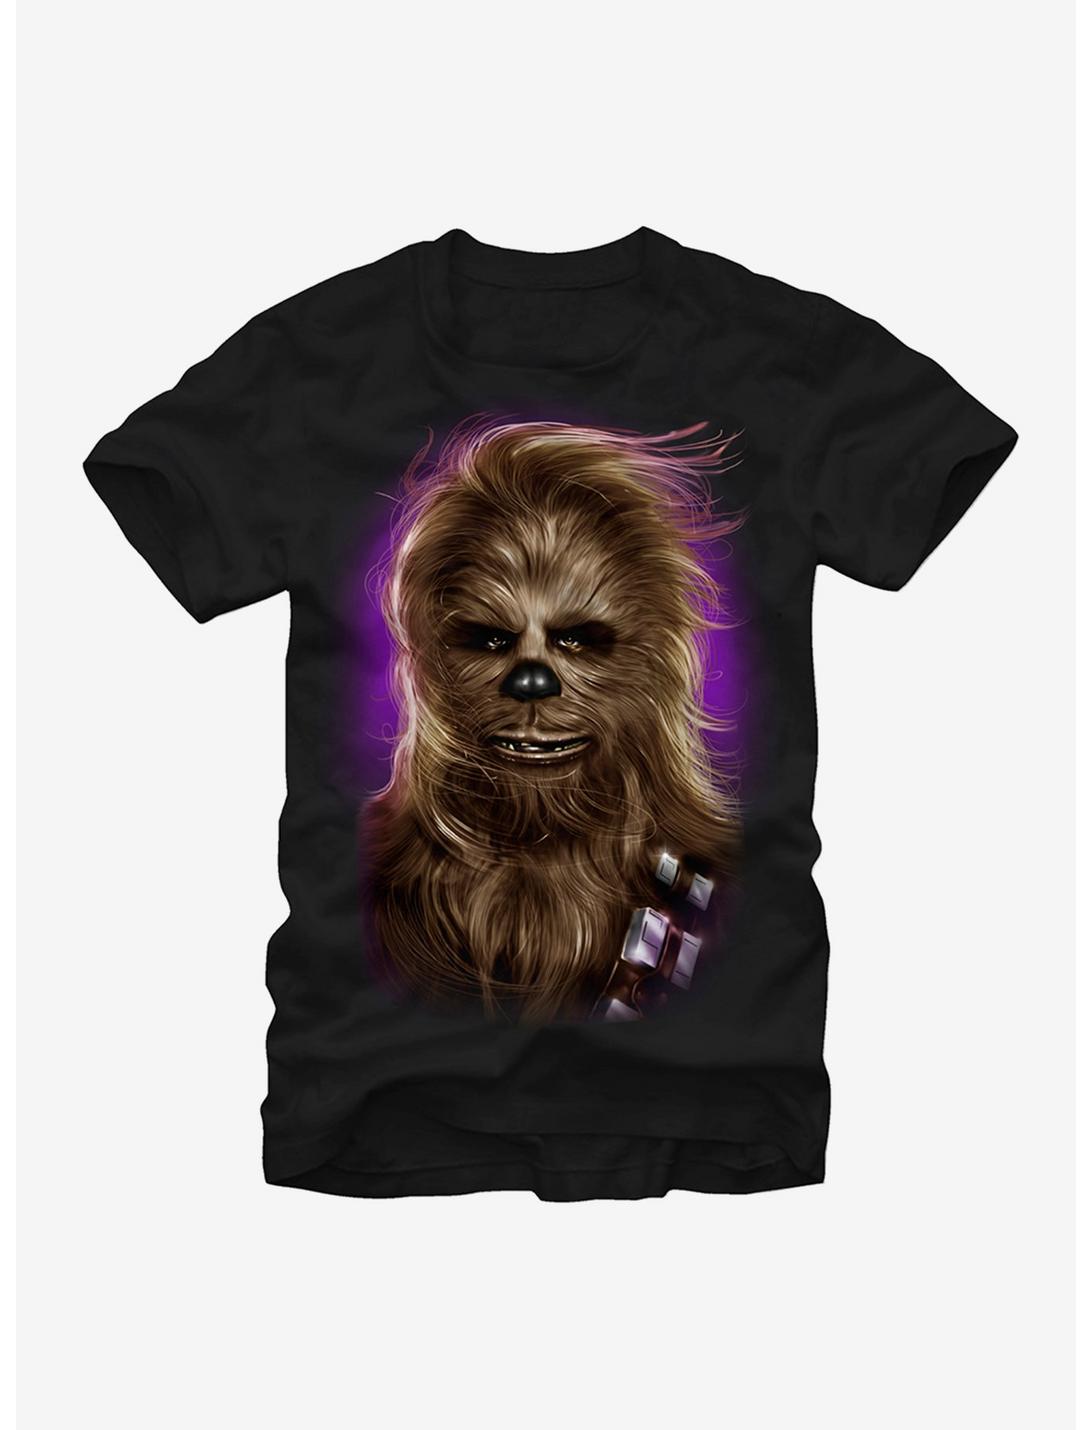 Star Wars Chewbacca Glamor Shot T-Shirt, BLACK, hi-res